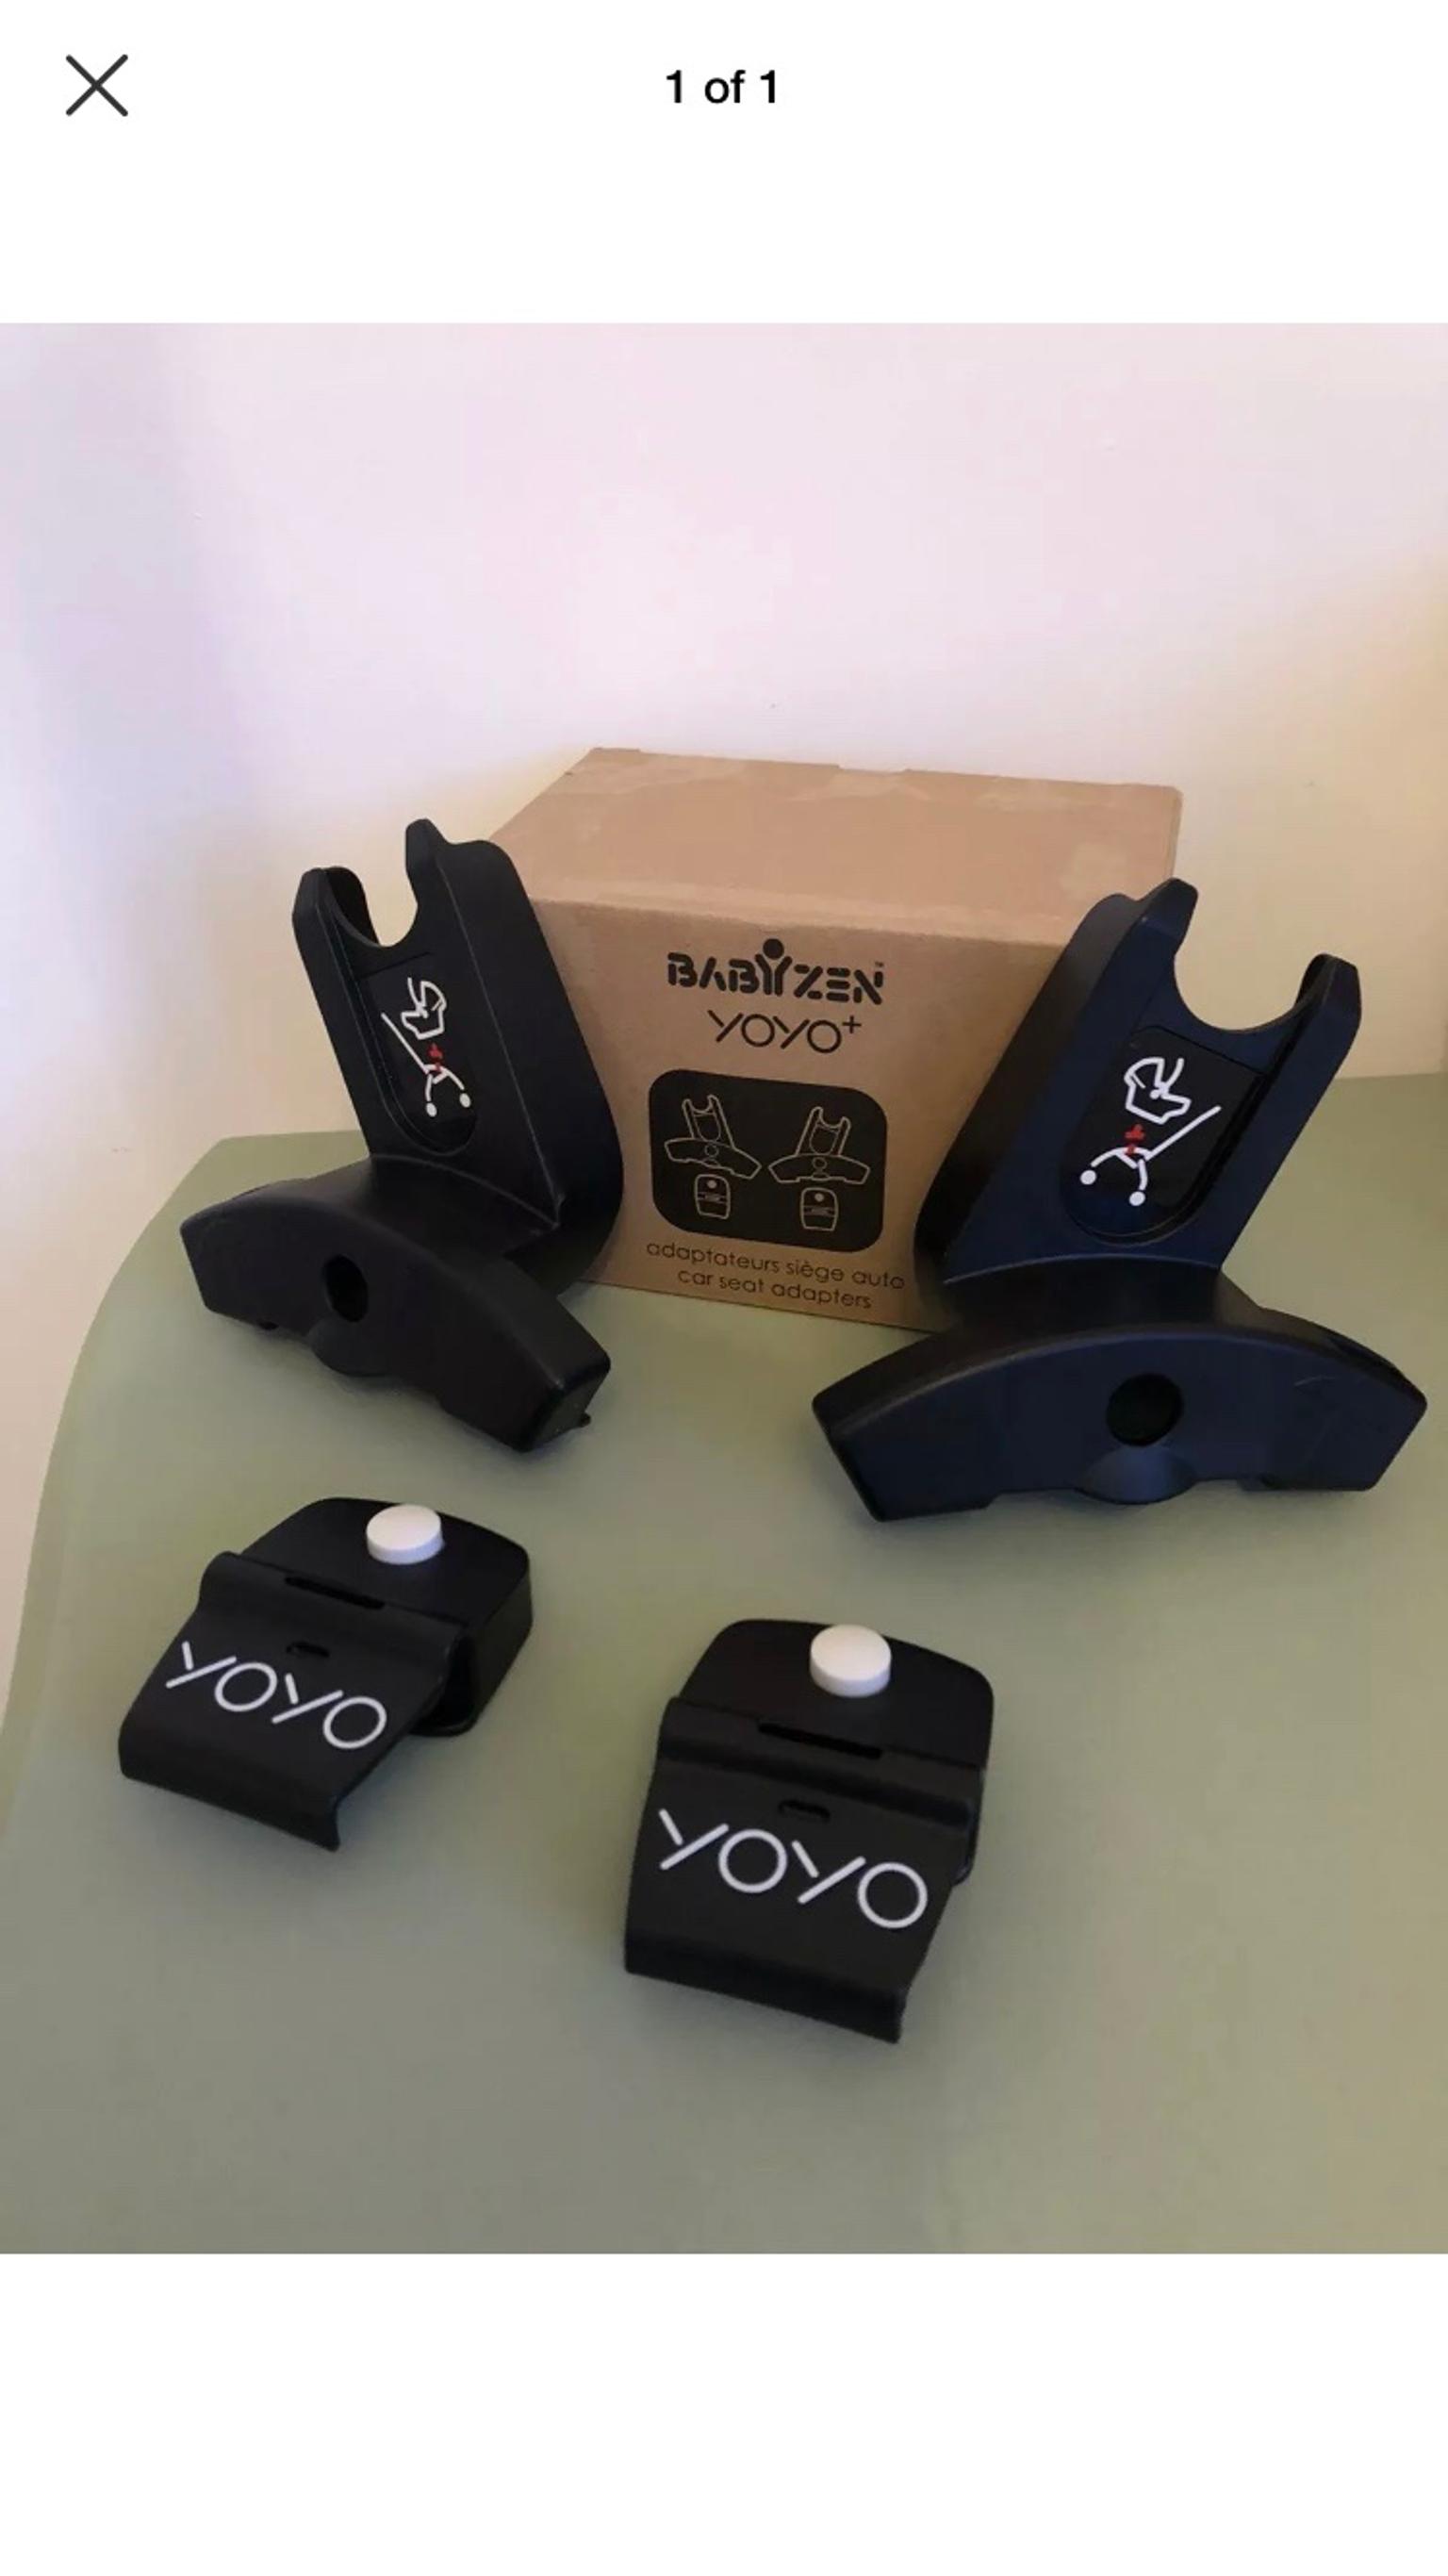 yoyo adapters